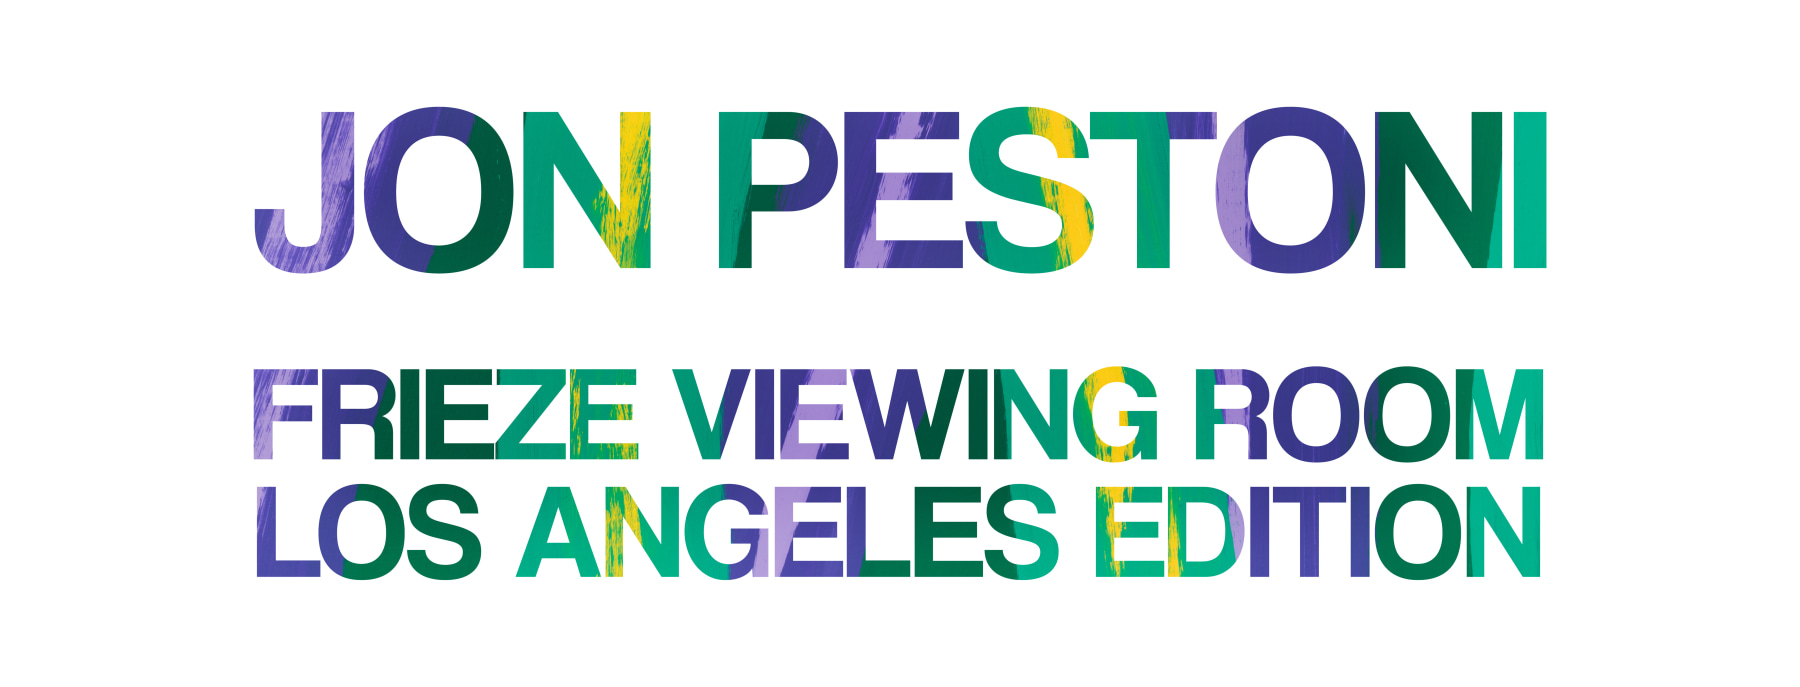 Jon Pestoni - Frieze Viewing Room Los Angeles Edition - Viewing Room - David Kordansky Gallery